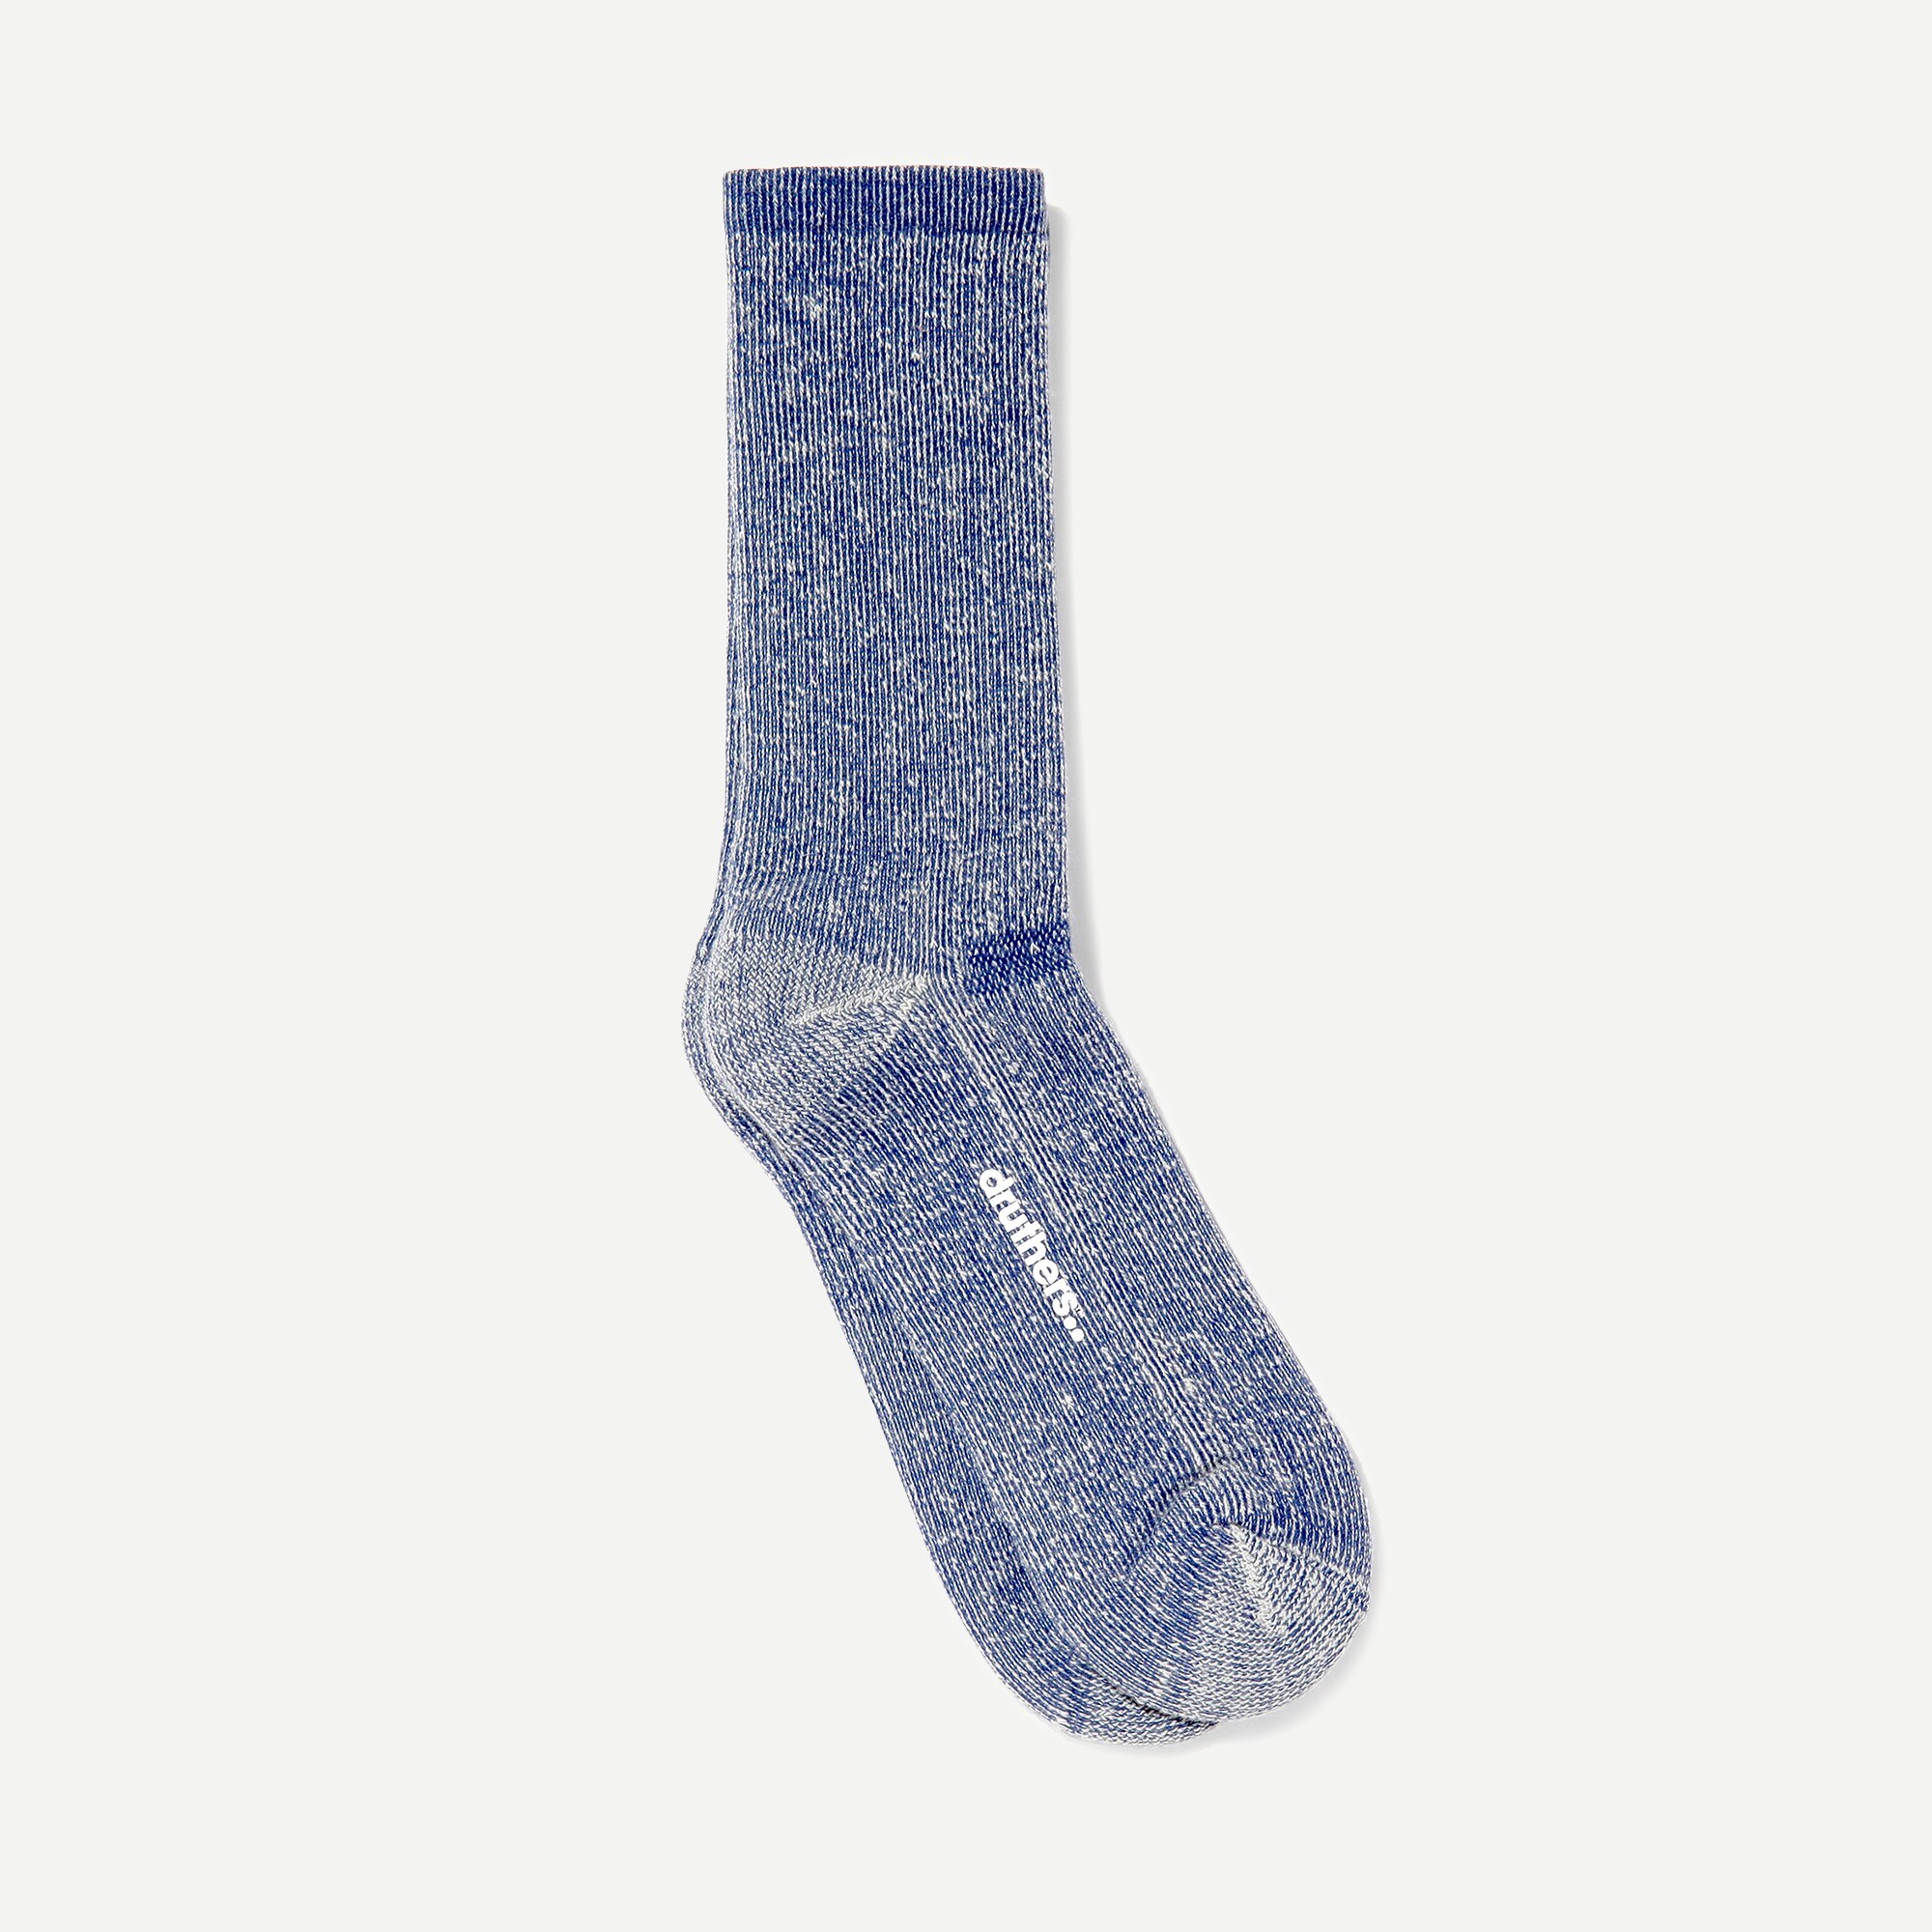  Druthers™ merino wool boot socks